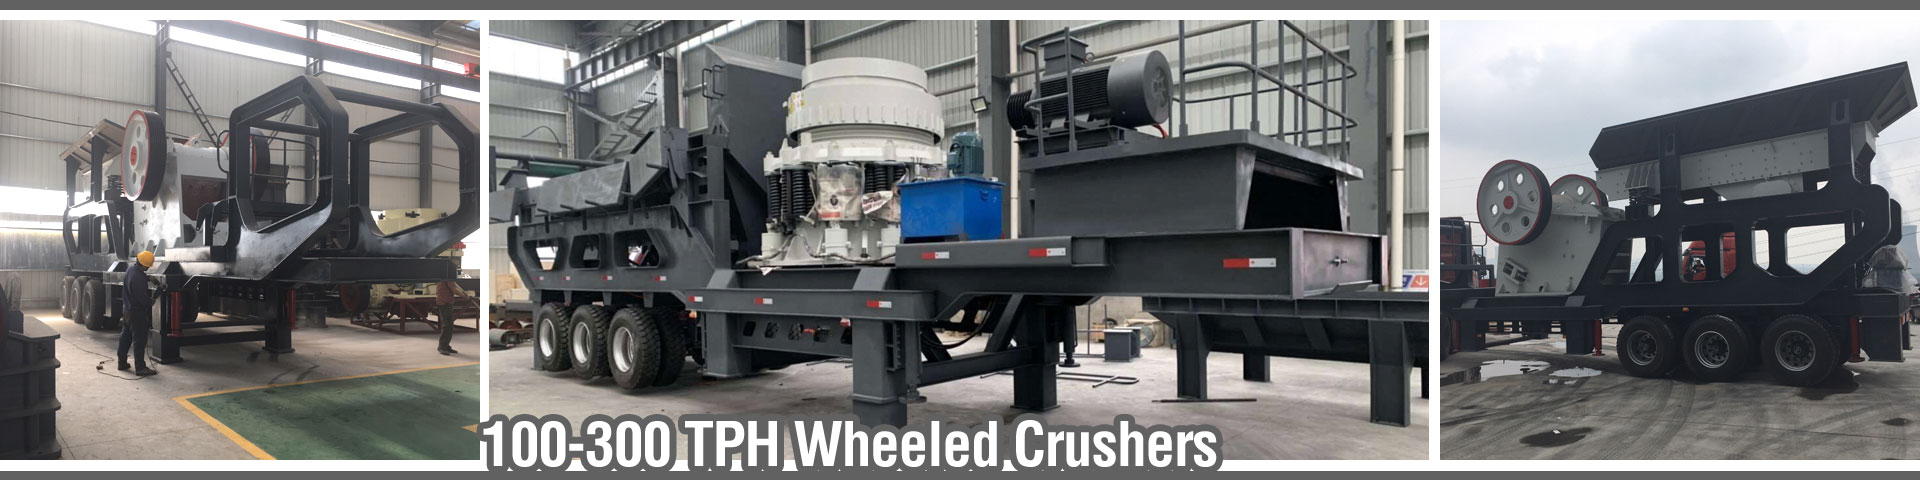 200tph wheeled crusher manufacturers